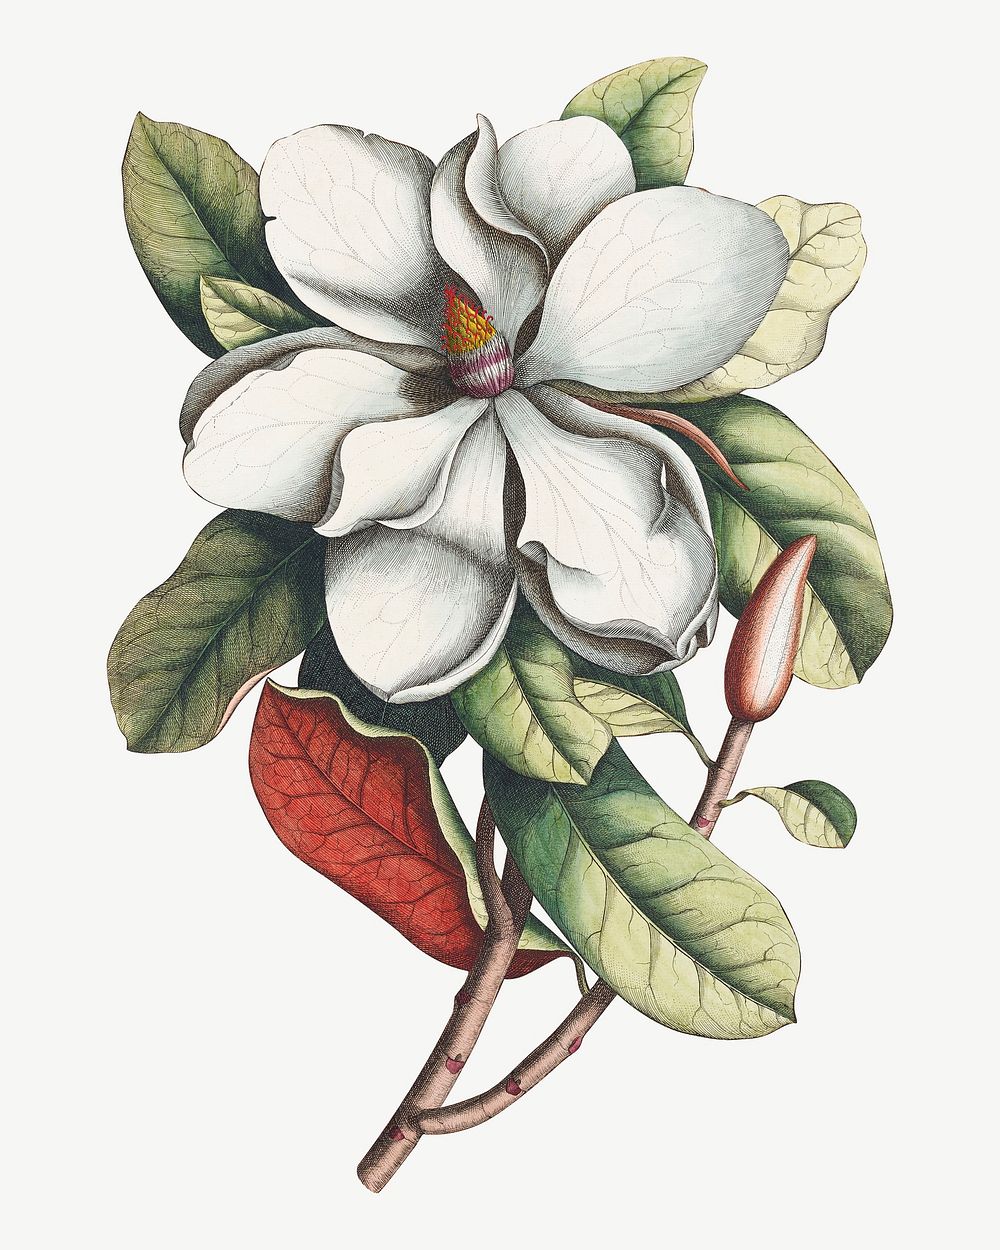 Magnolia grandiflora, vintage flower illustration by Georg Dionysius Ehret; Etcher psd. Remixed by rawpixel.